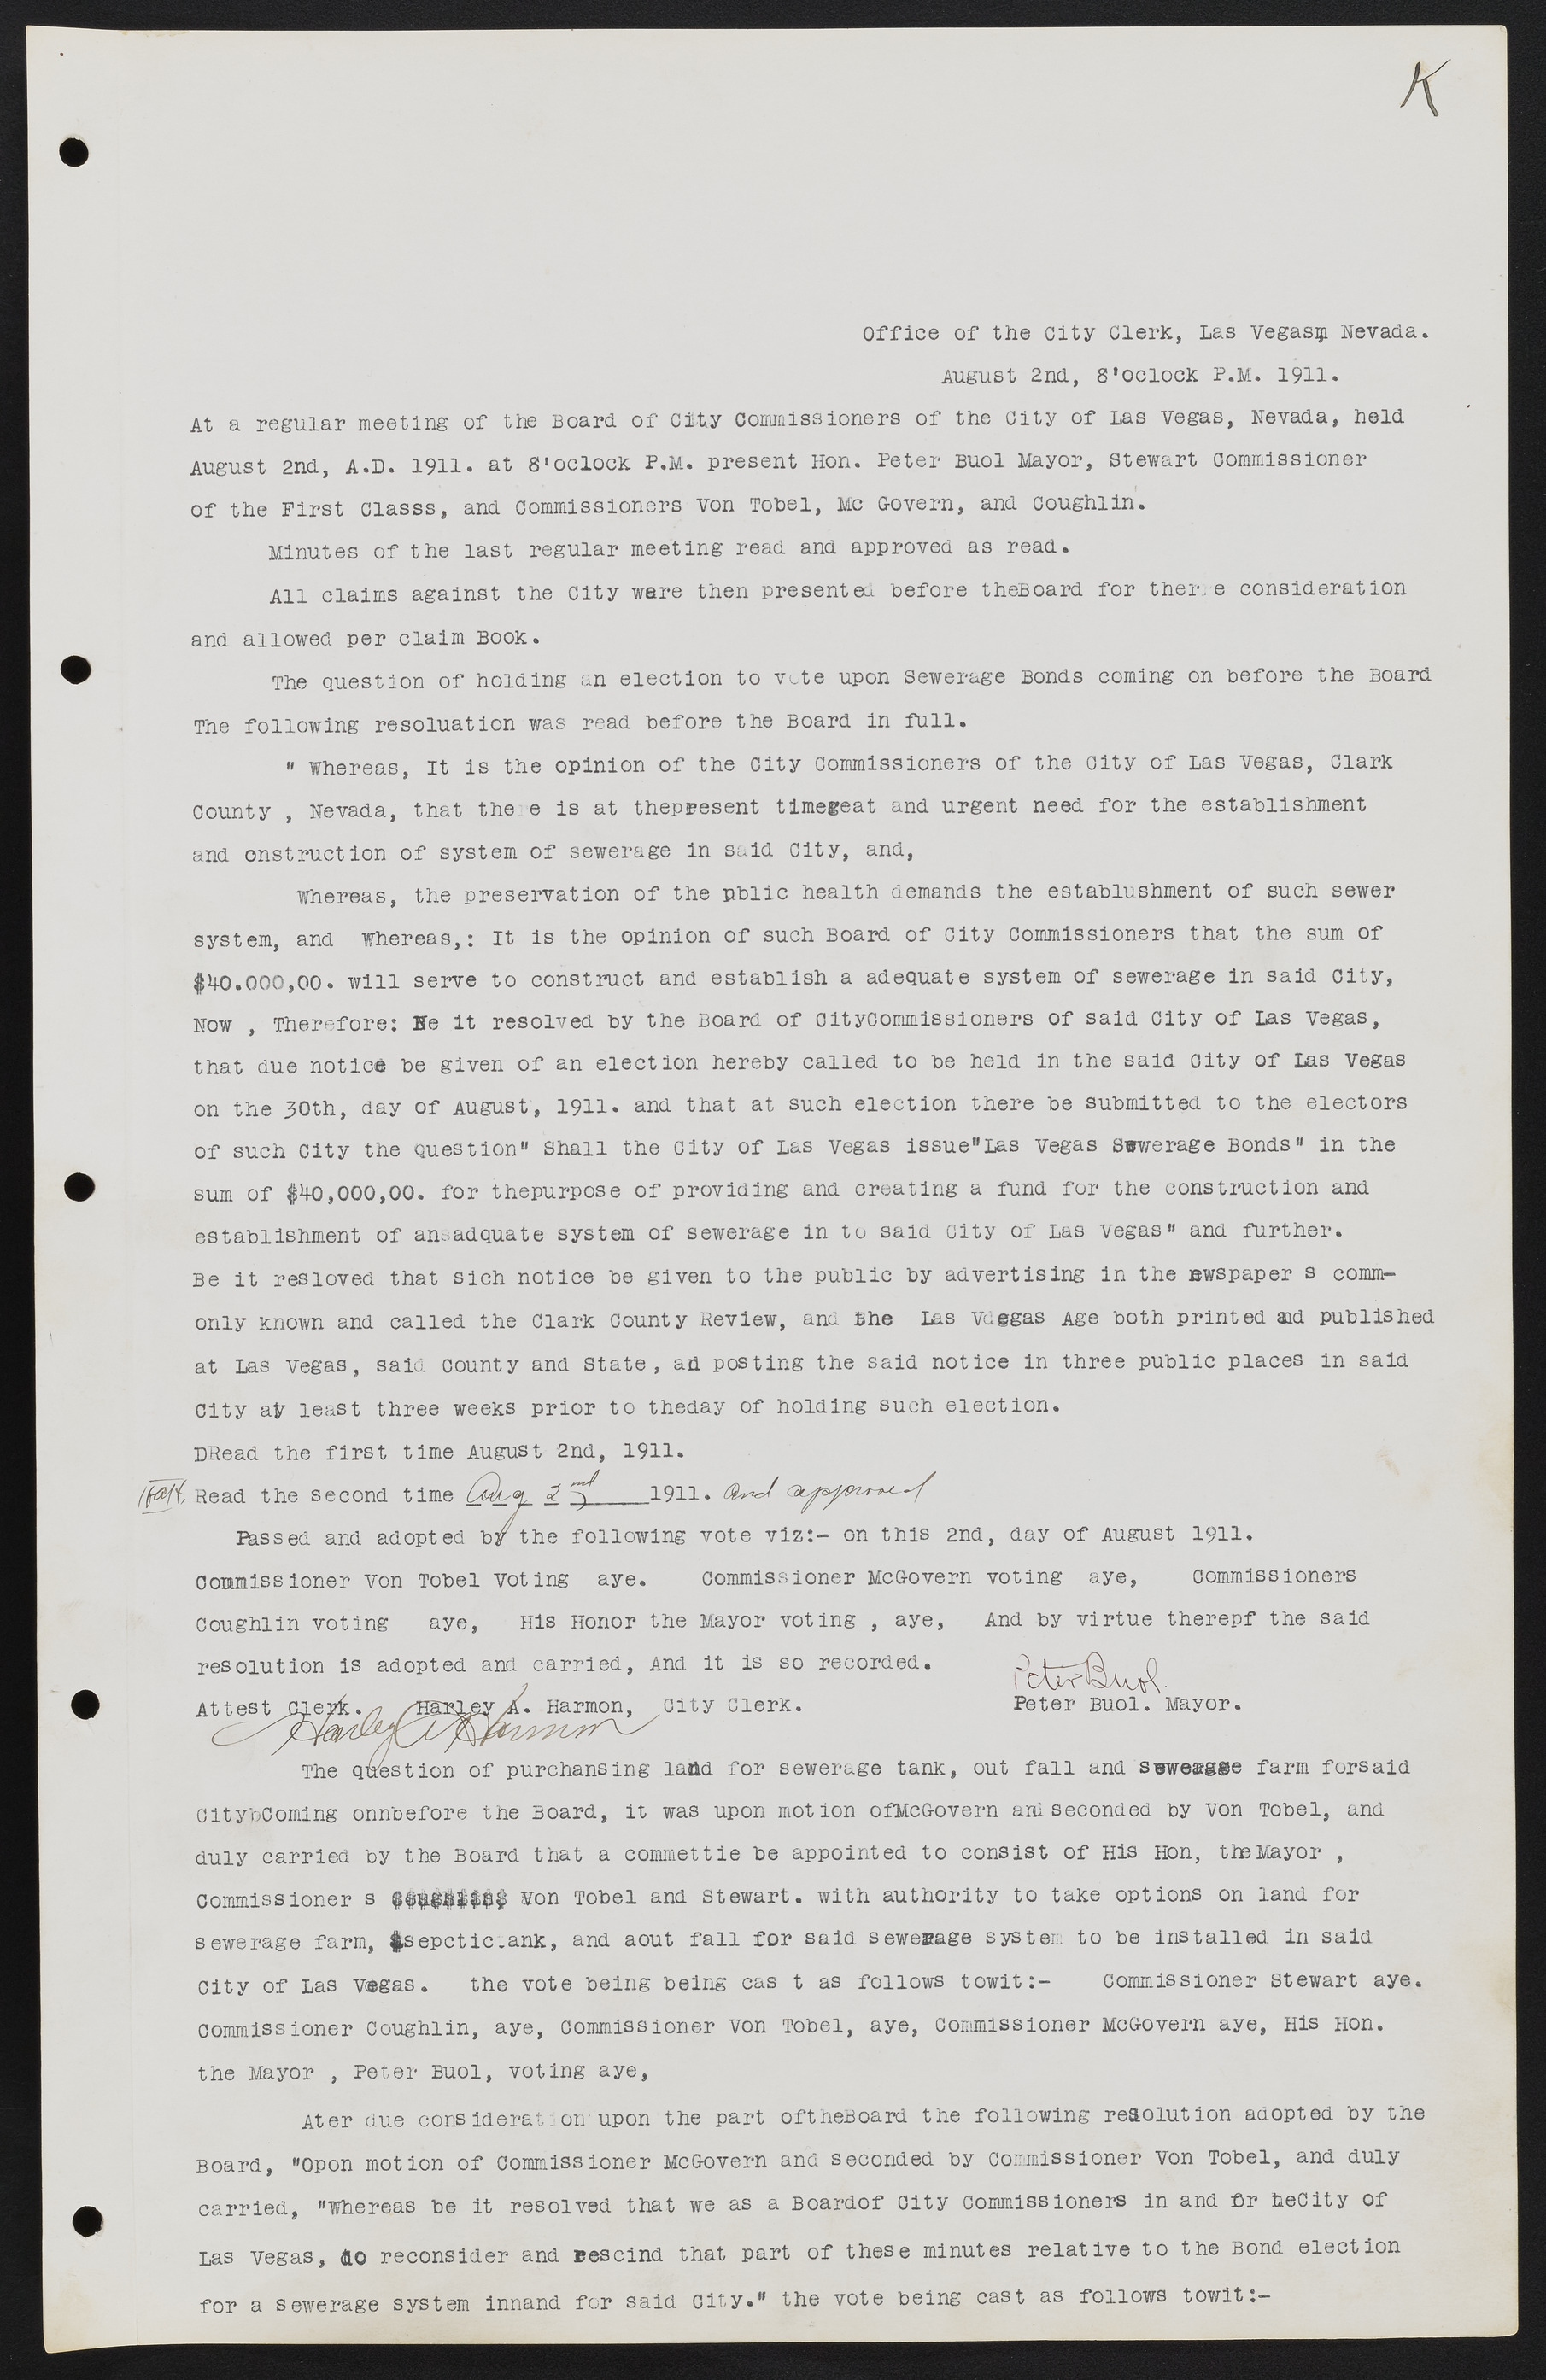 Las Vegas City Commission Minutes, June 22, 1911 to February 7, 1922, lvc000001-13